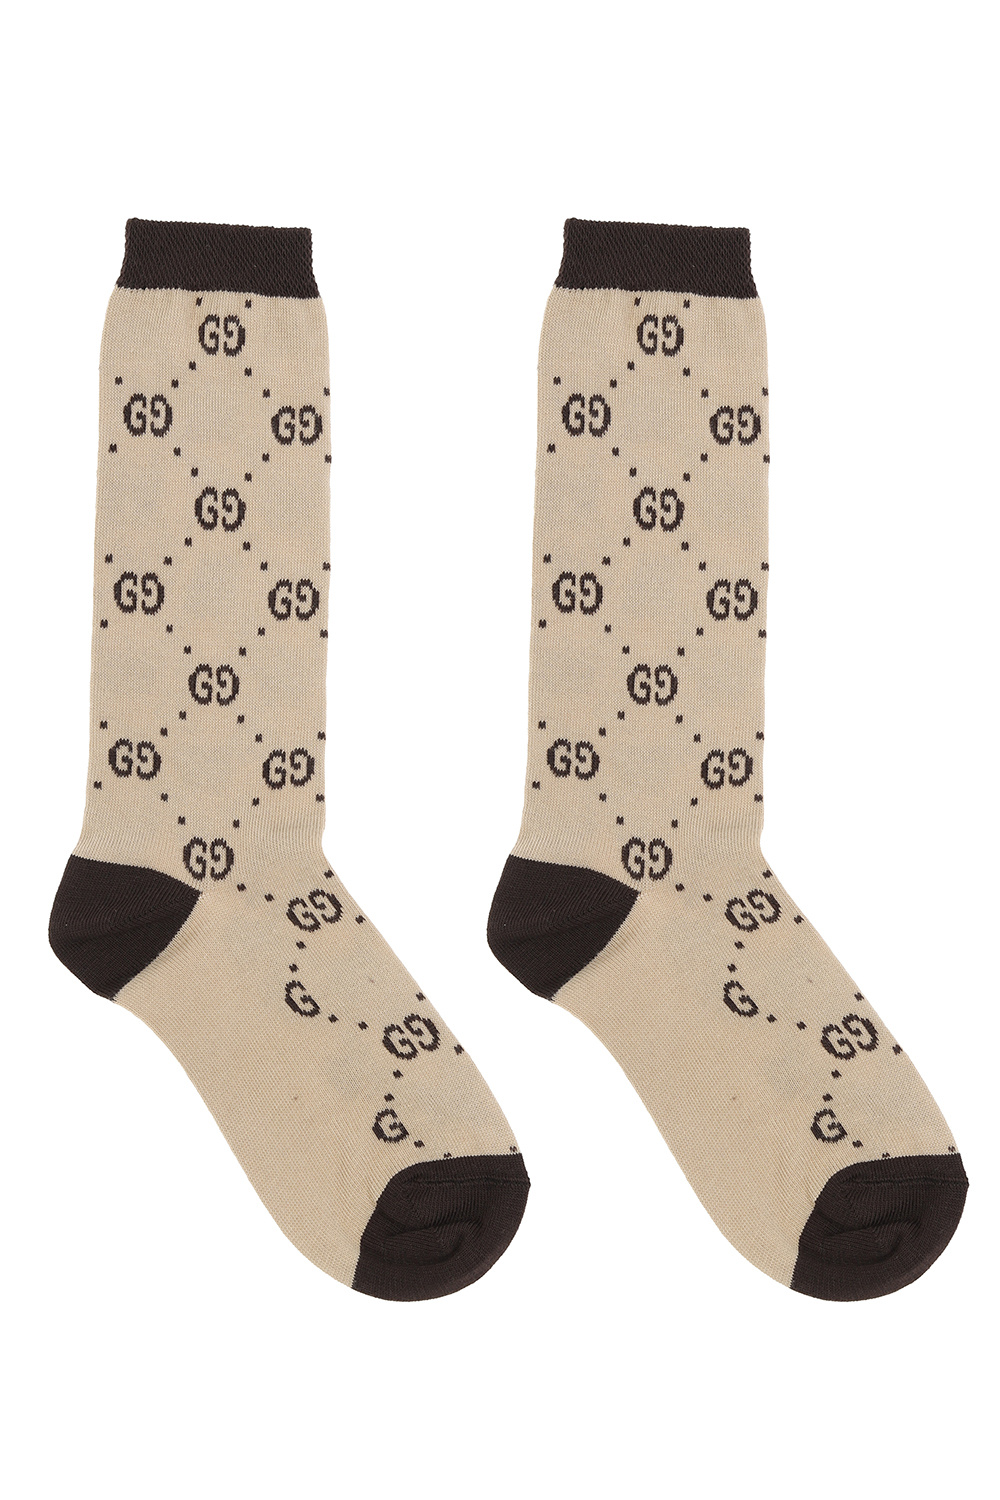 StclaircomoShops Australia - gucci embroidered cushions - Beige Socks with logo  Gucci Kids